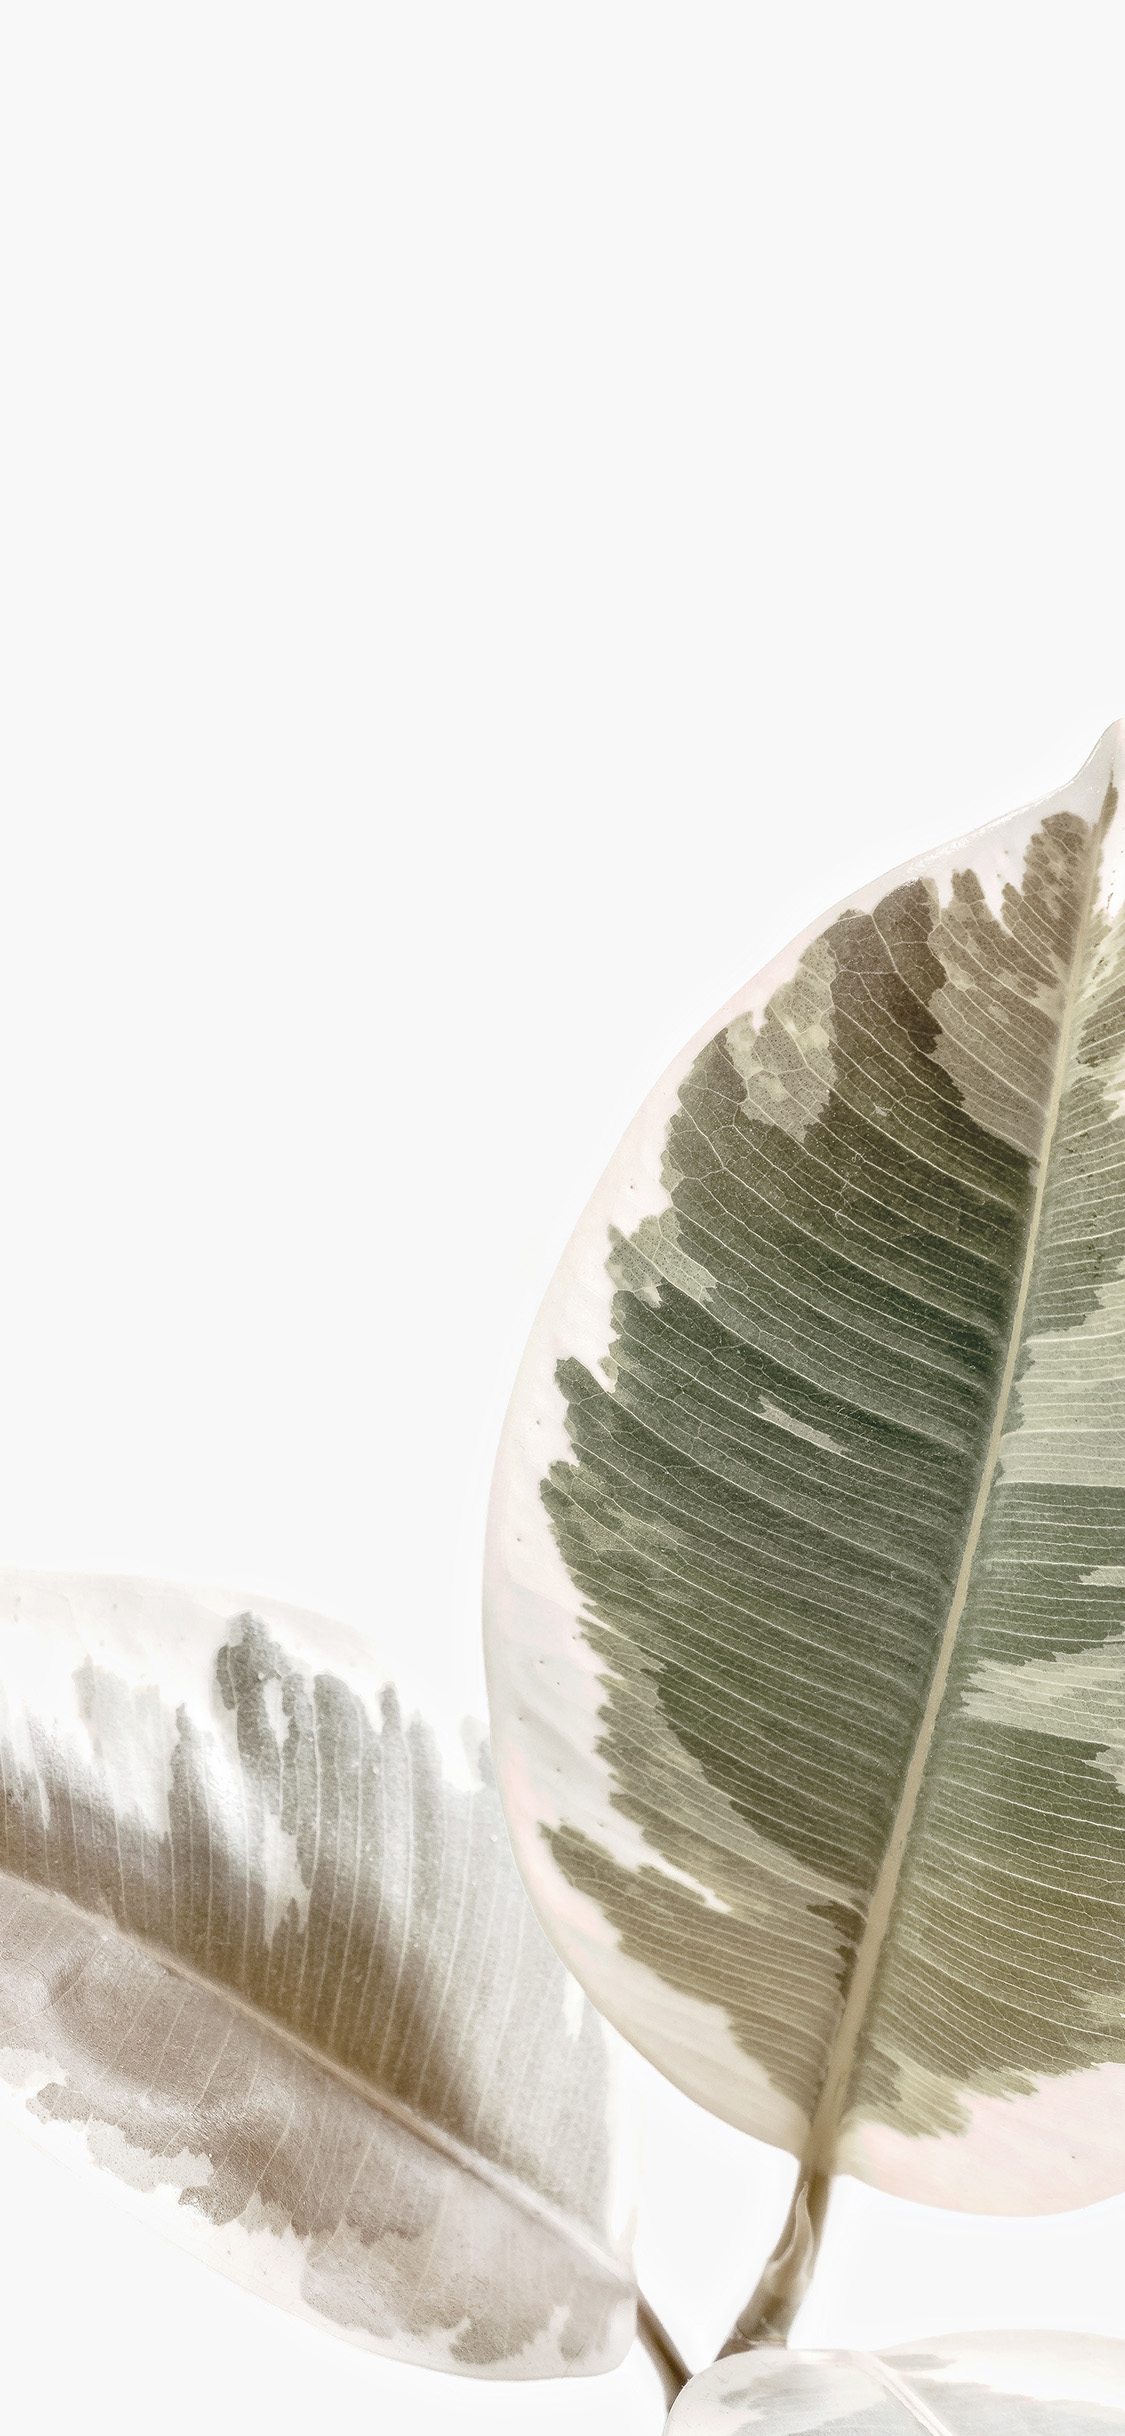 iPhone X wallpaper. white minimal simple leaf nature